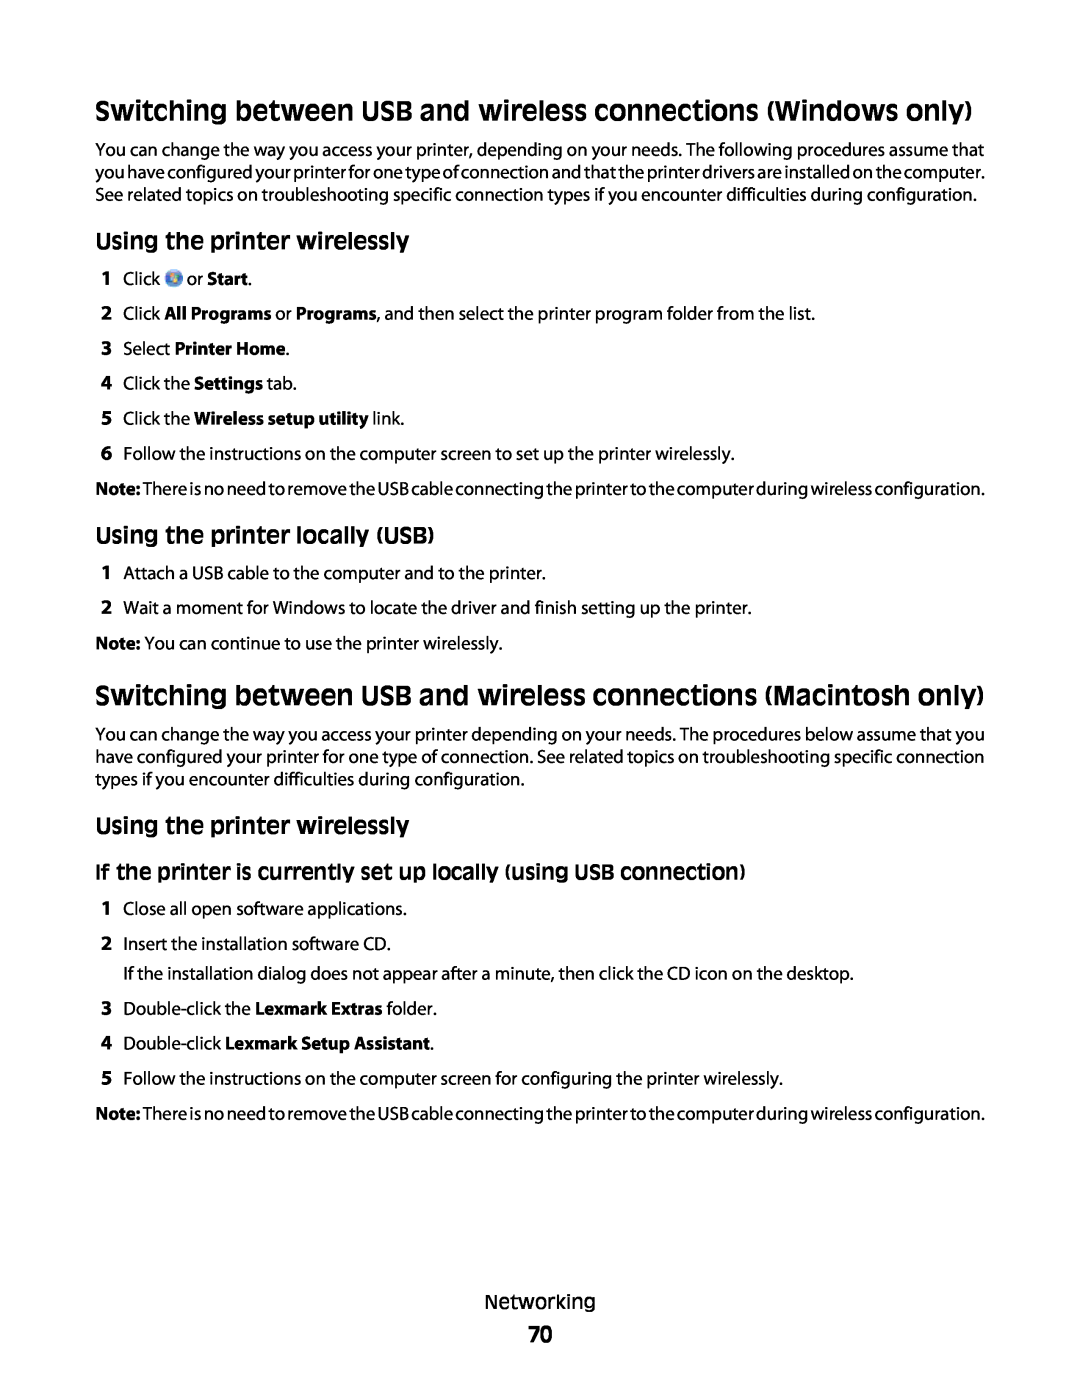 Lexmark 101, 10E manual Using the printer wirelessly, Using the printer locally USB, 3Select Printer Home 